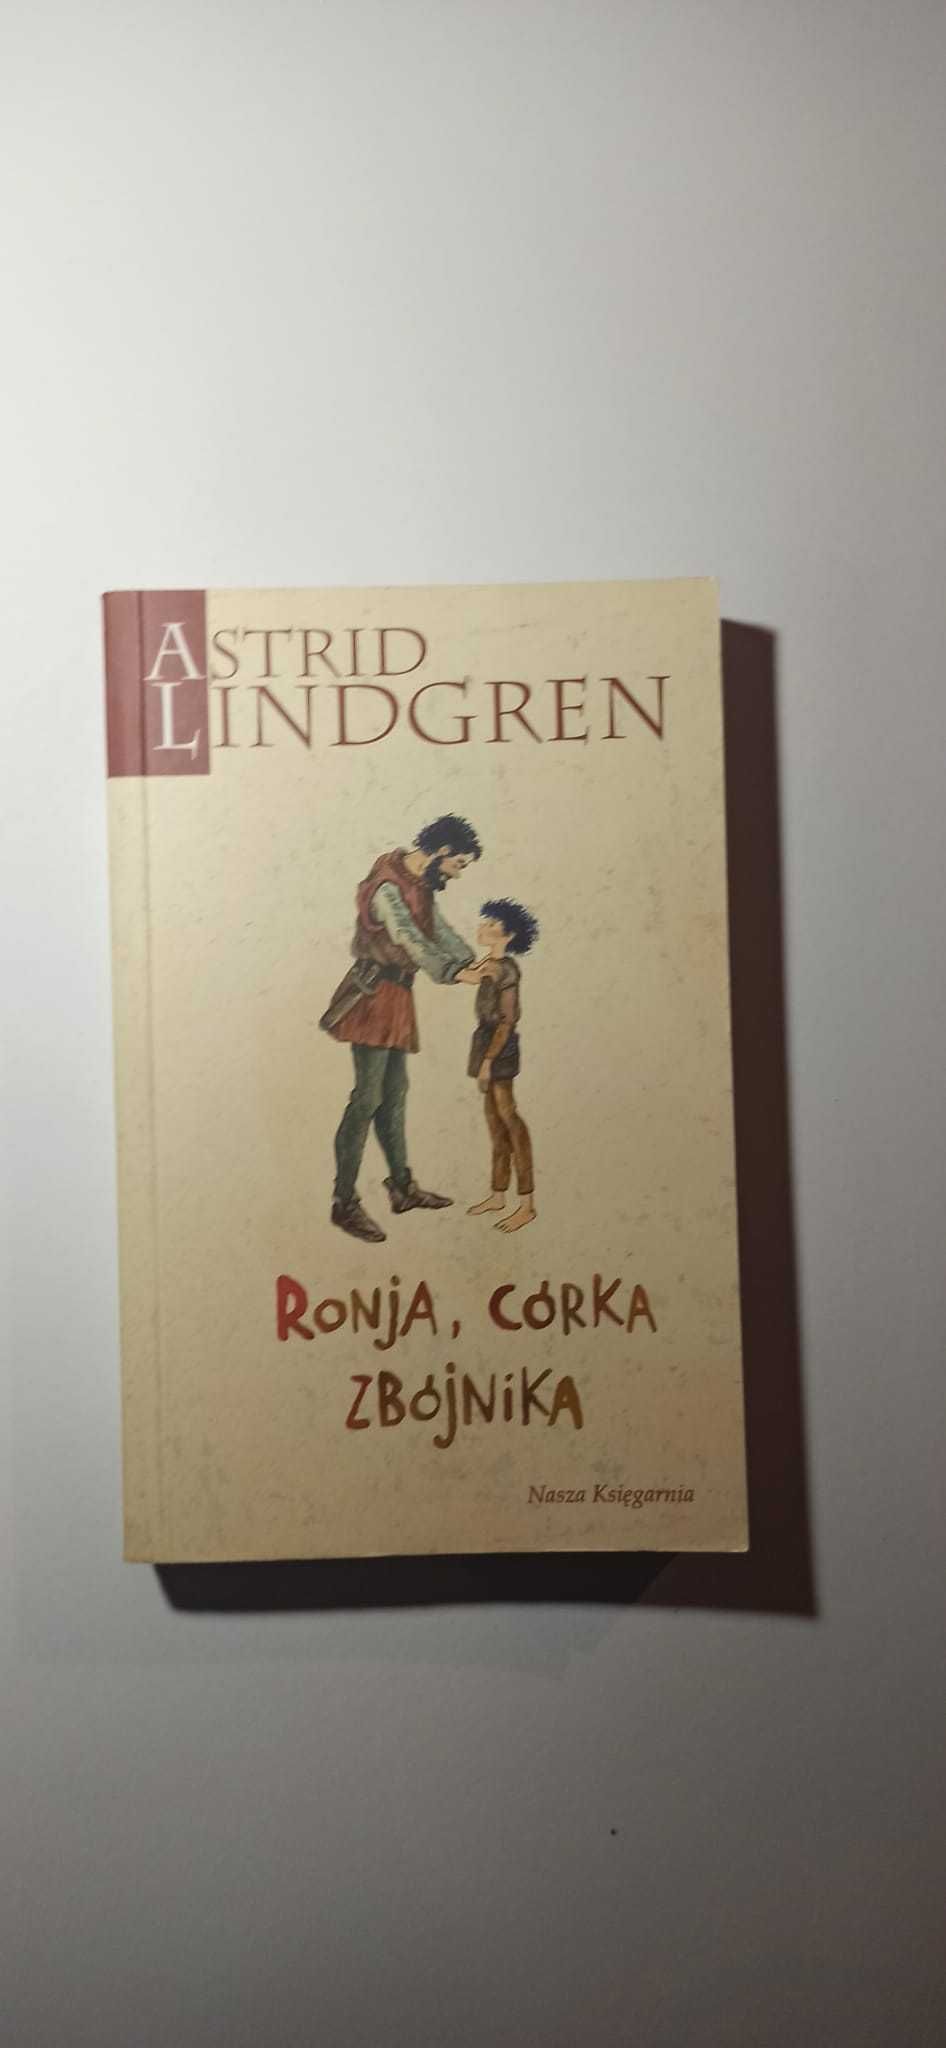 Astrid Lindgren, "Ronja, Córka Zbójnika"